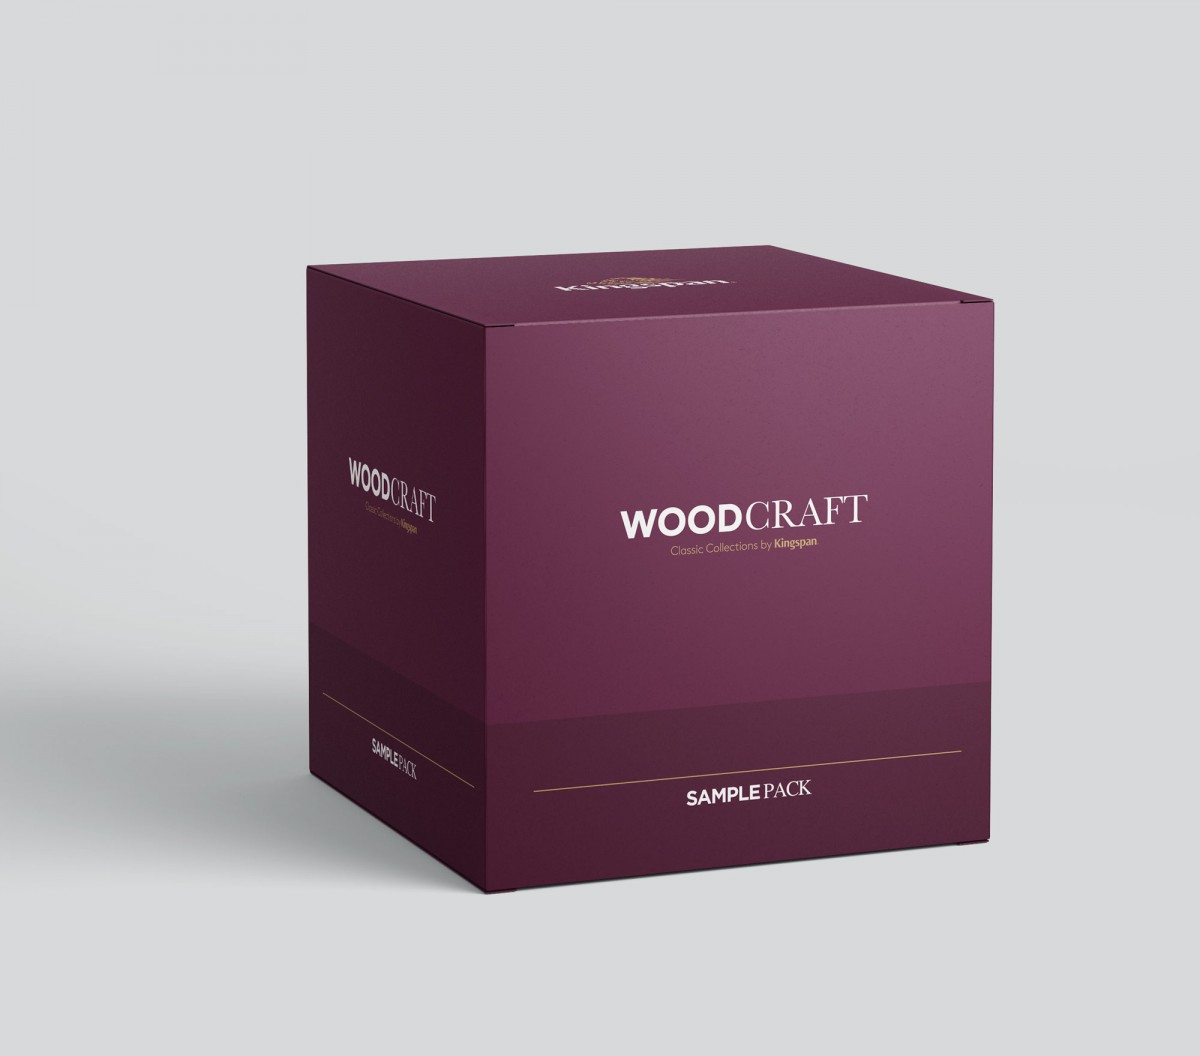 Woodcraft box mockup